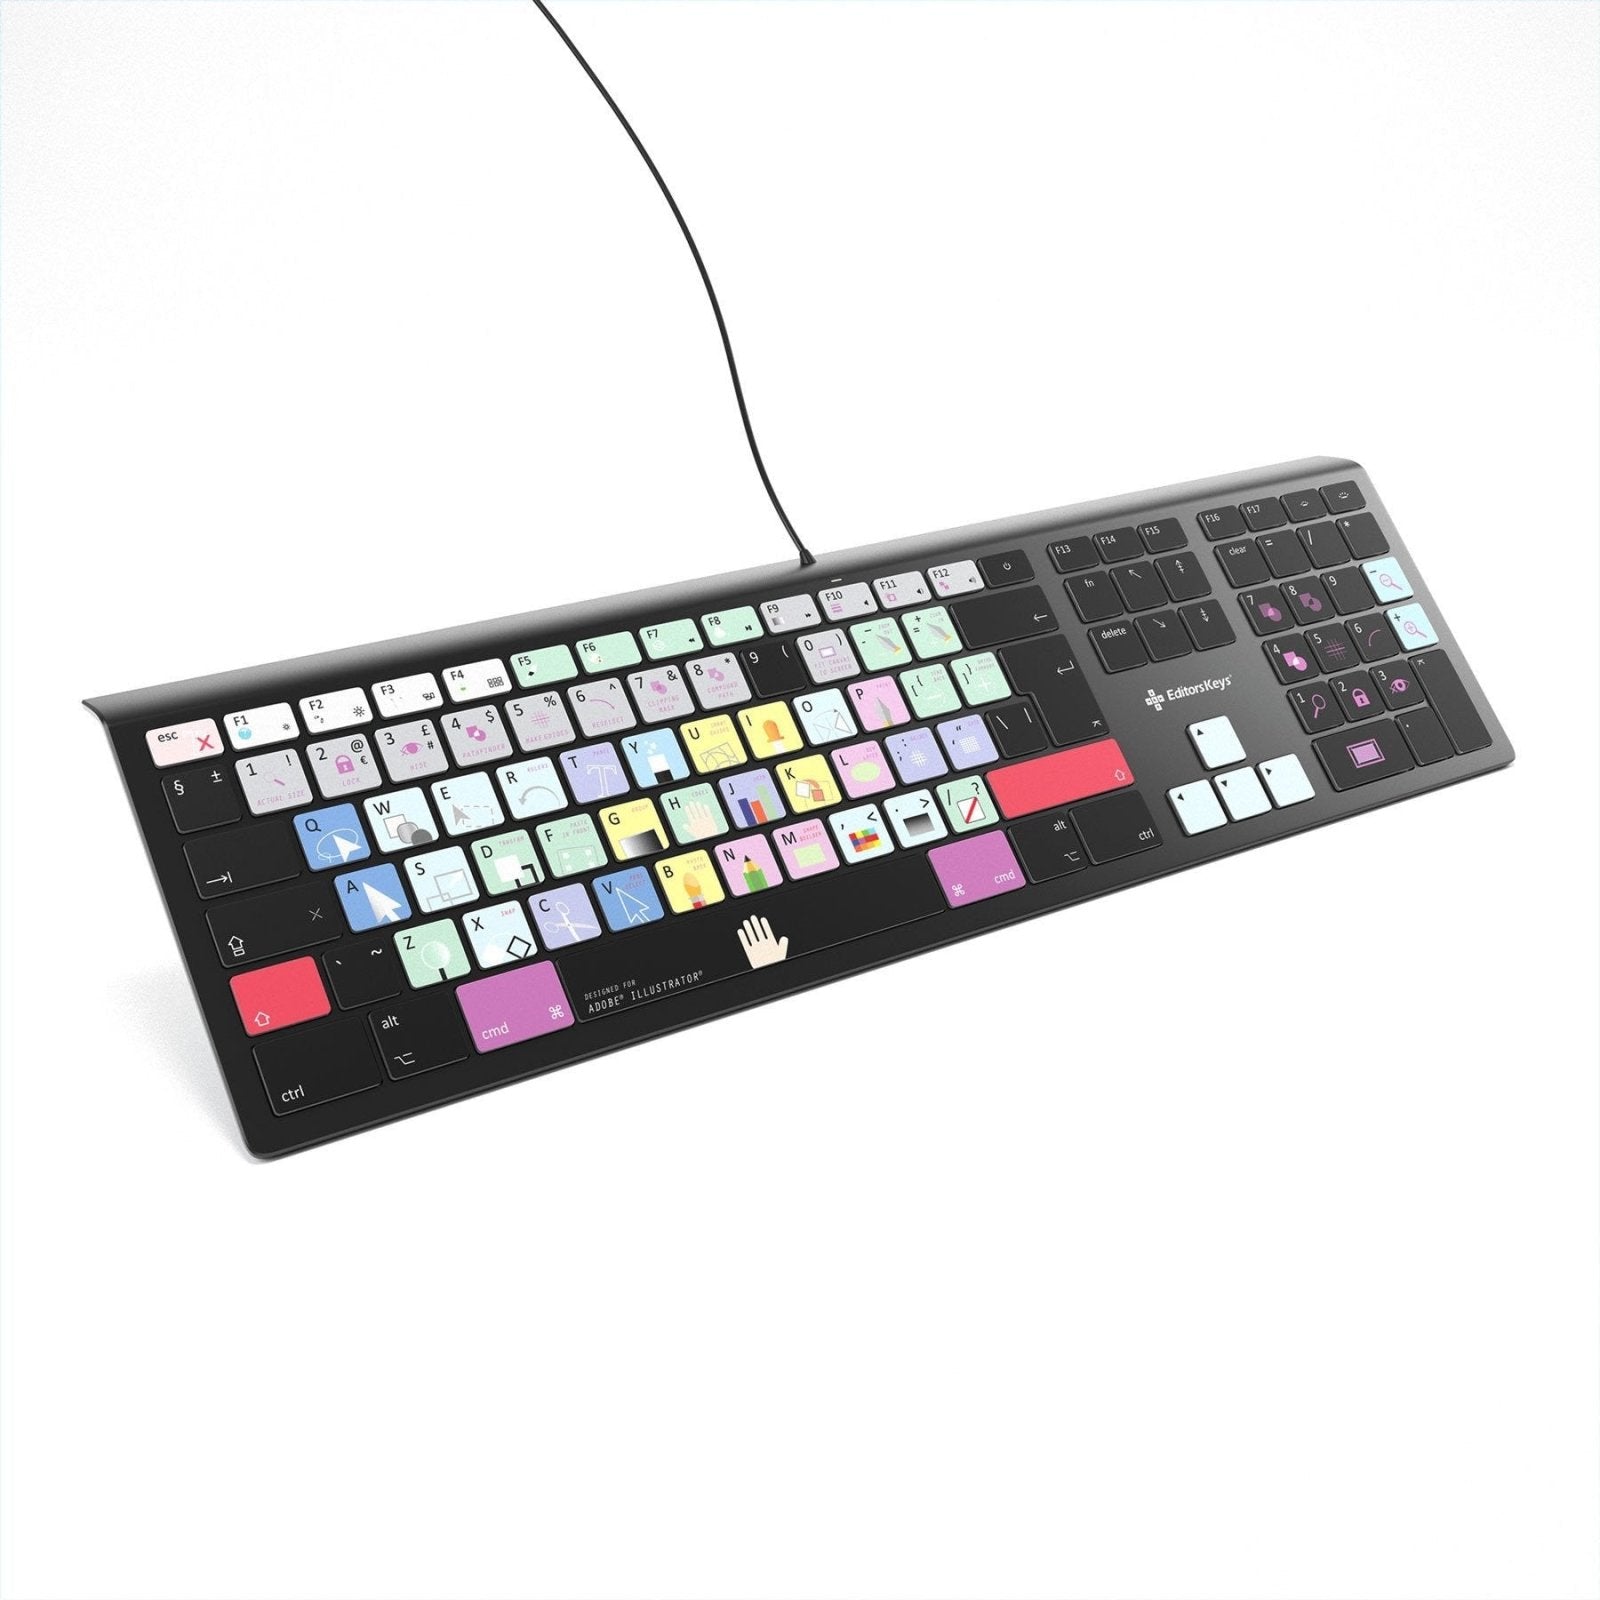 Adobe Illustrator Keyboard - Backlit Mac or PC - Editors Keys